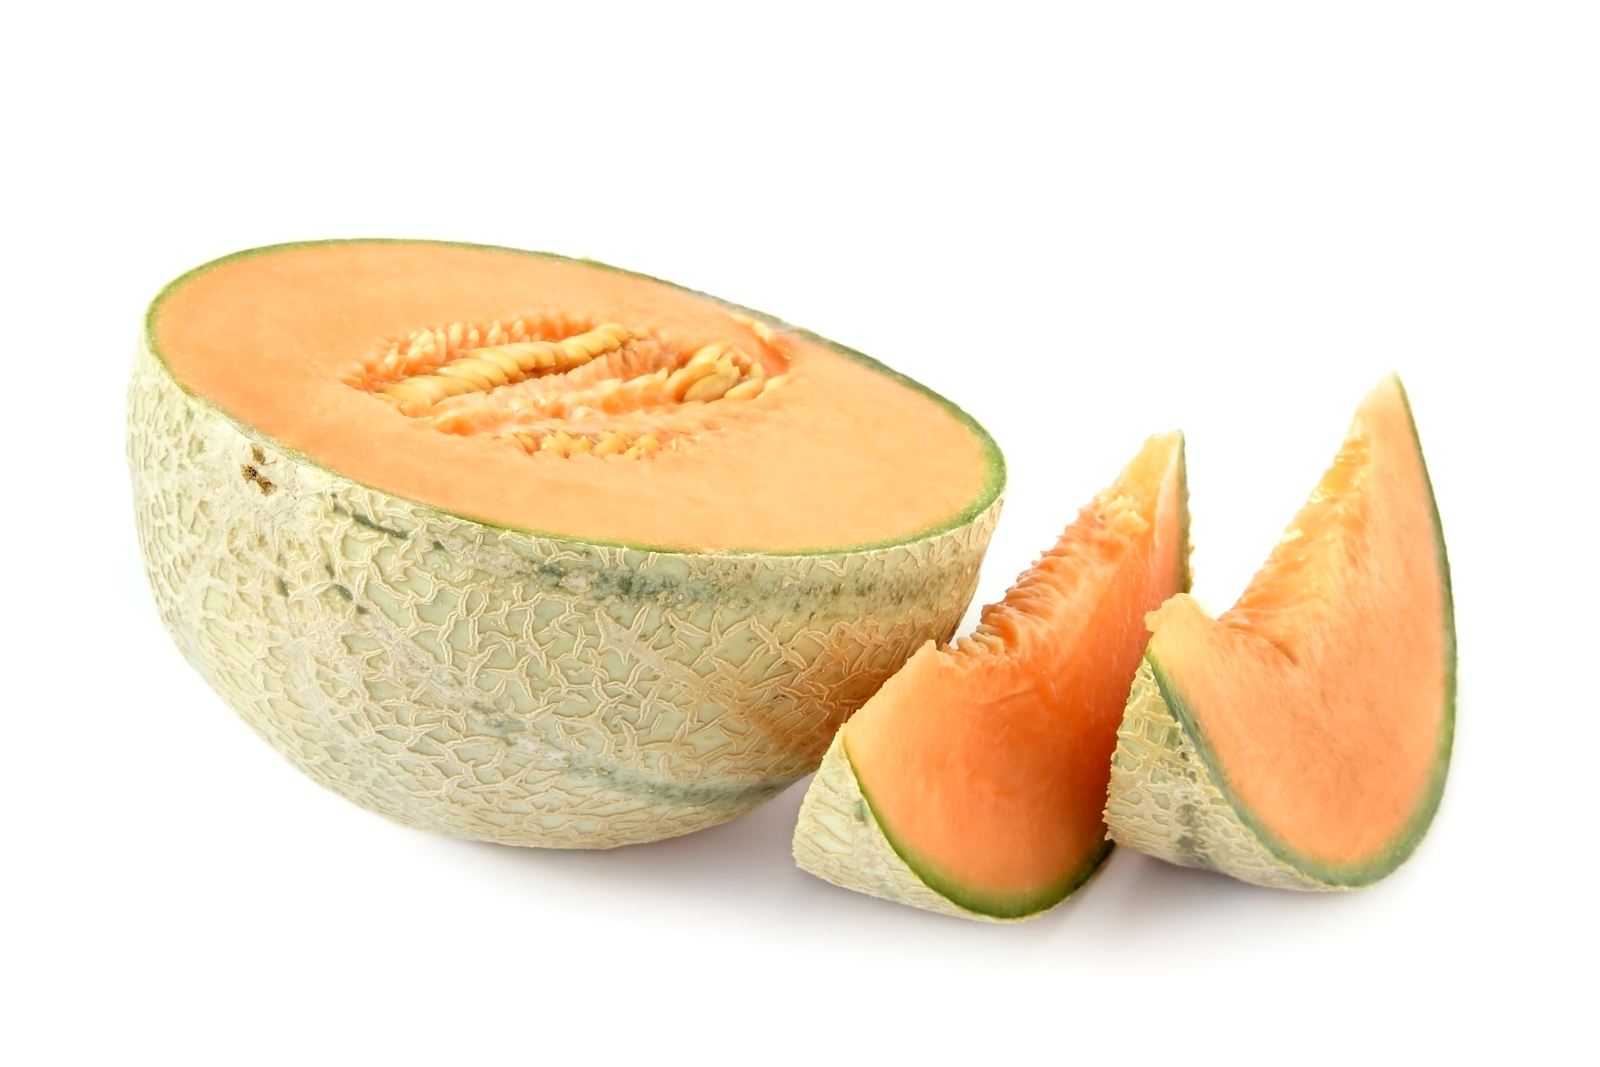 melon